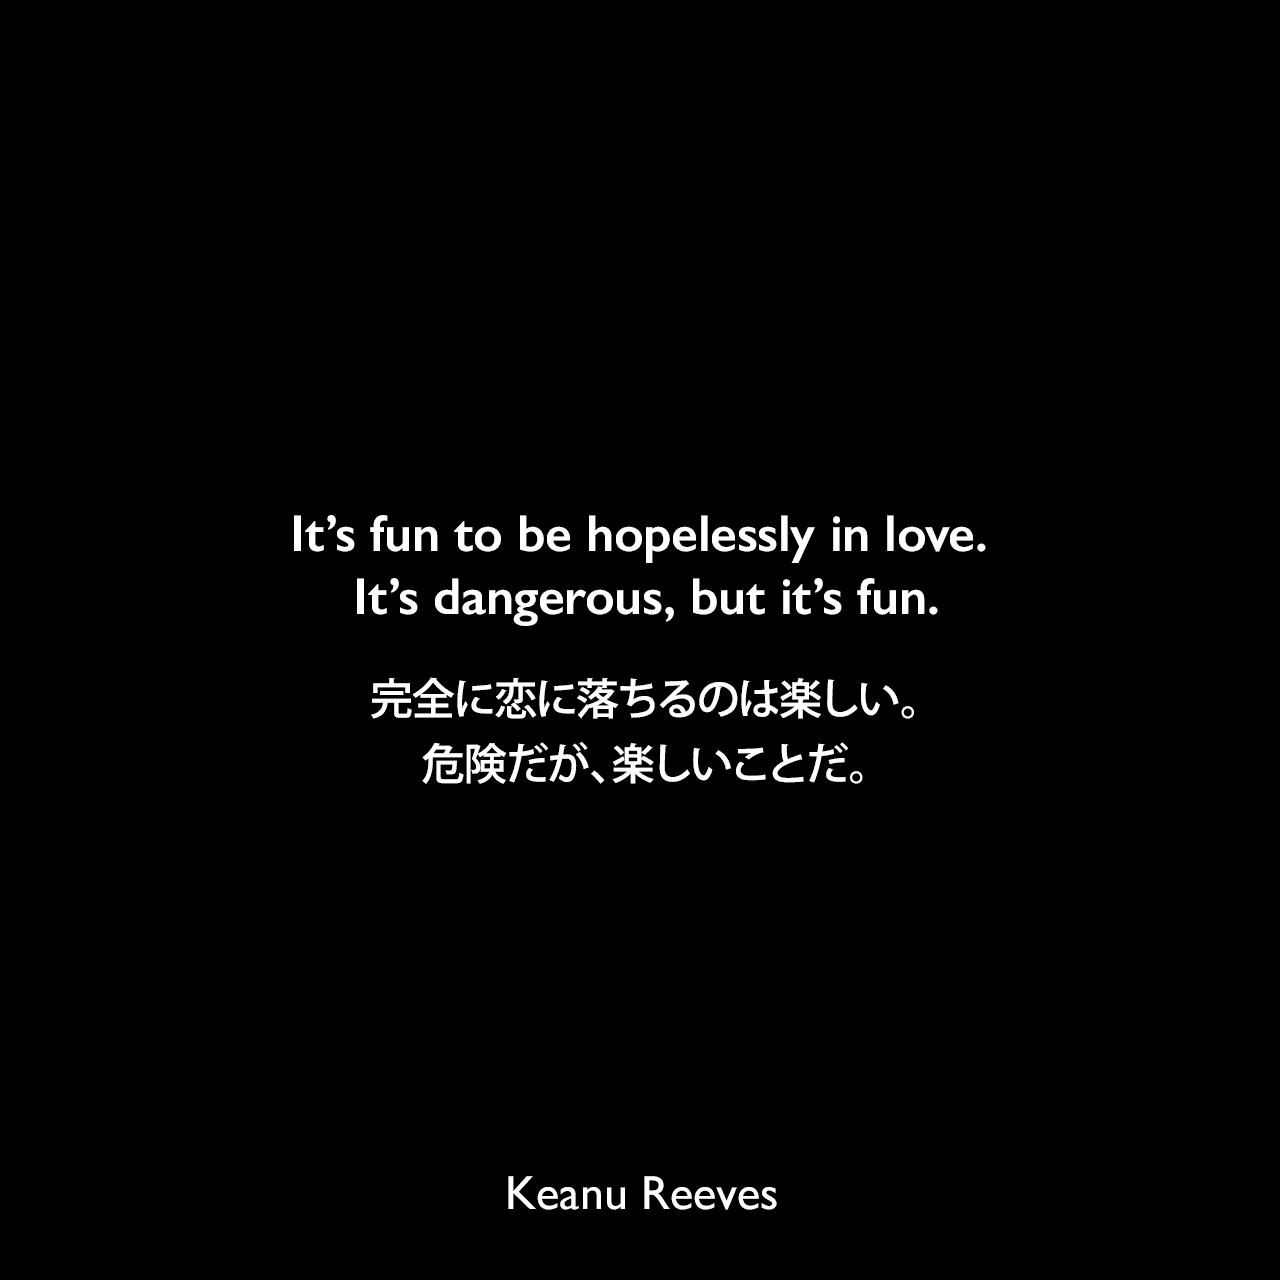 It’s fun to be hopelessly in love. It’s dangerous, but it’s fun.完全に恋に落ちるのは楽しい。危険だが、楽しいことだ。Keanu Reeves